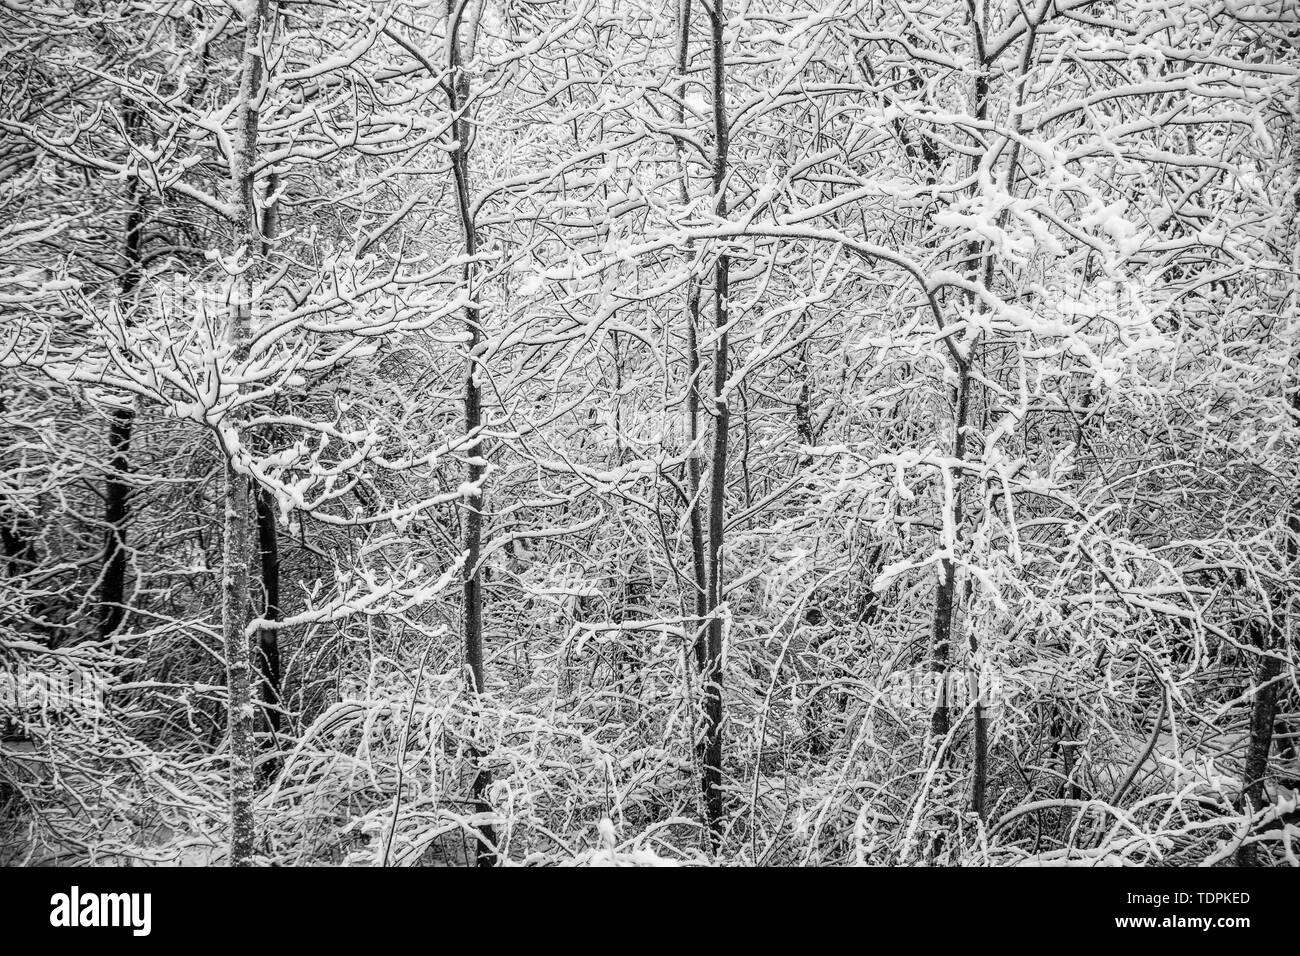 April spring snow coats a stand of Aspen trees along Parkers Brook;  Bedford, Nova Scotia, Canada Stock Photo - Alamy